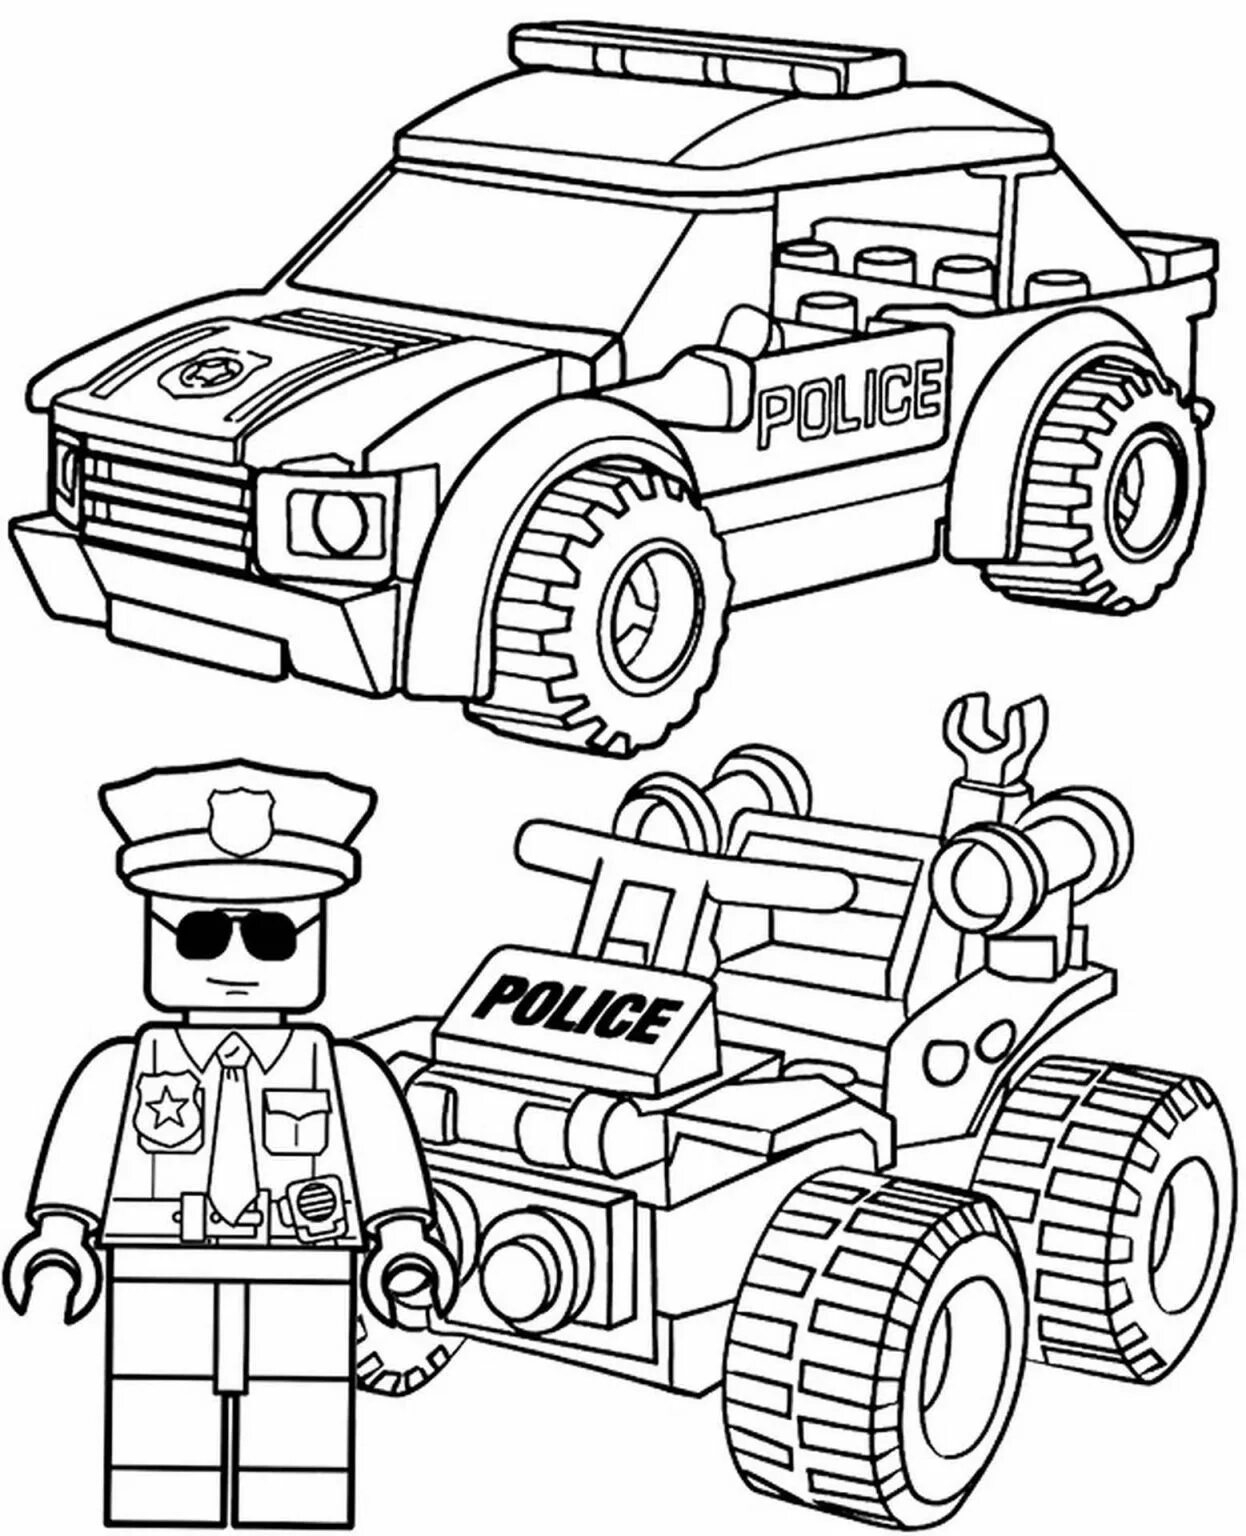 Lego cop #2